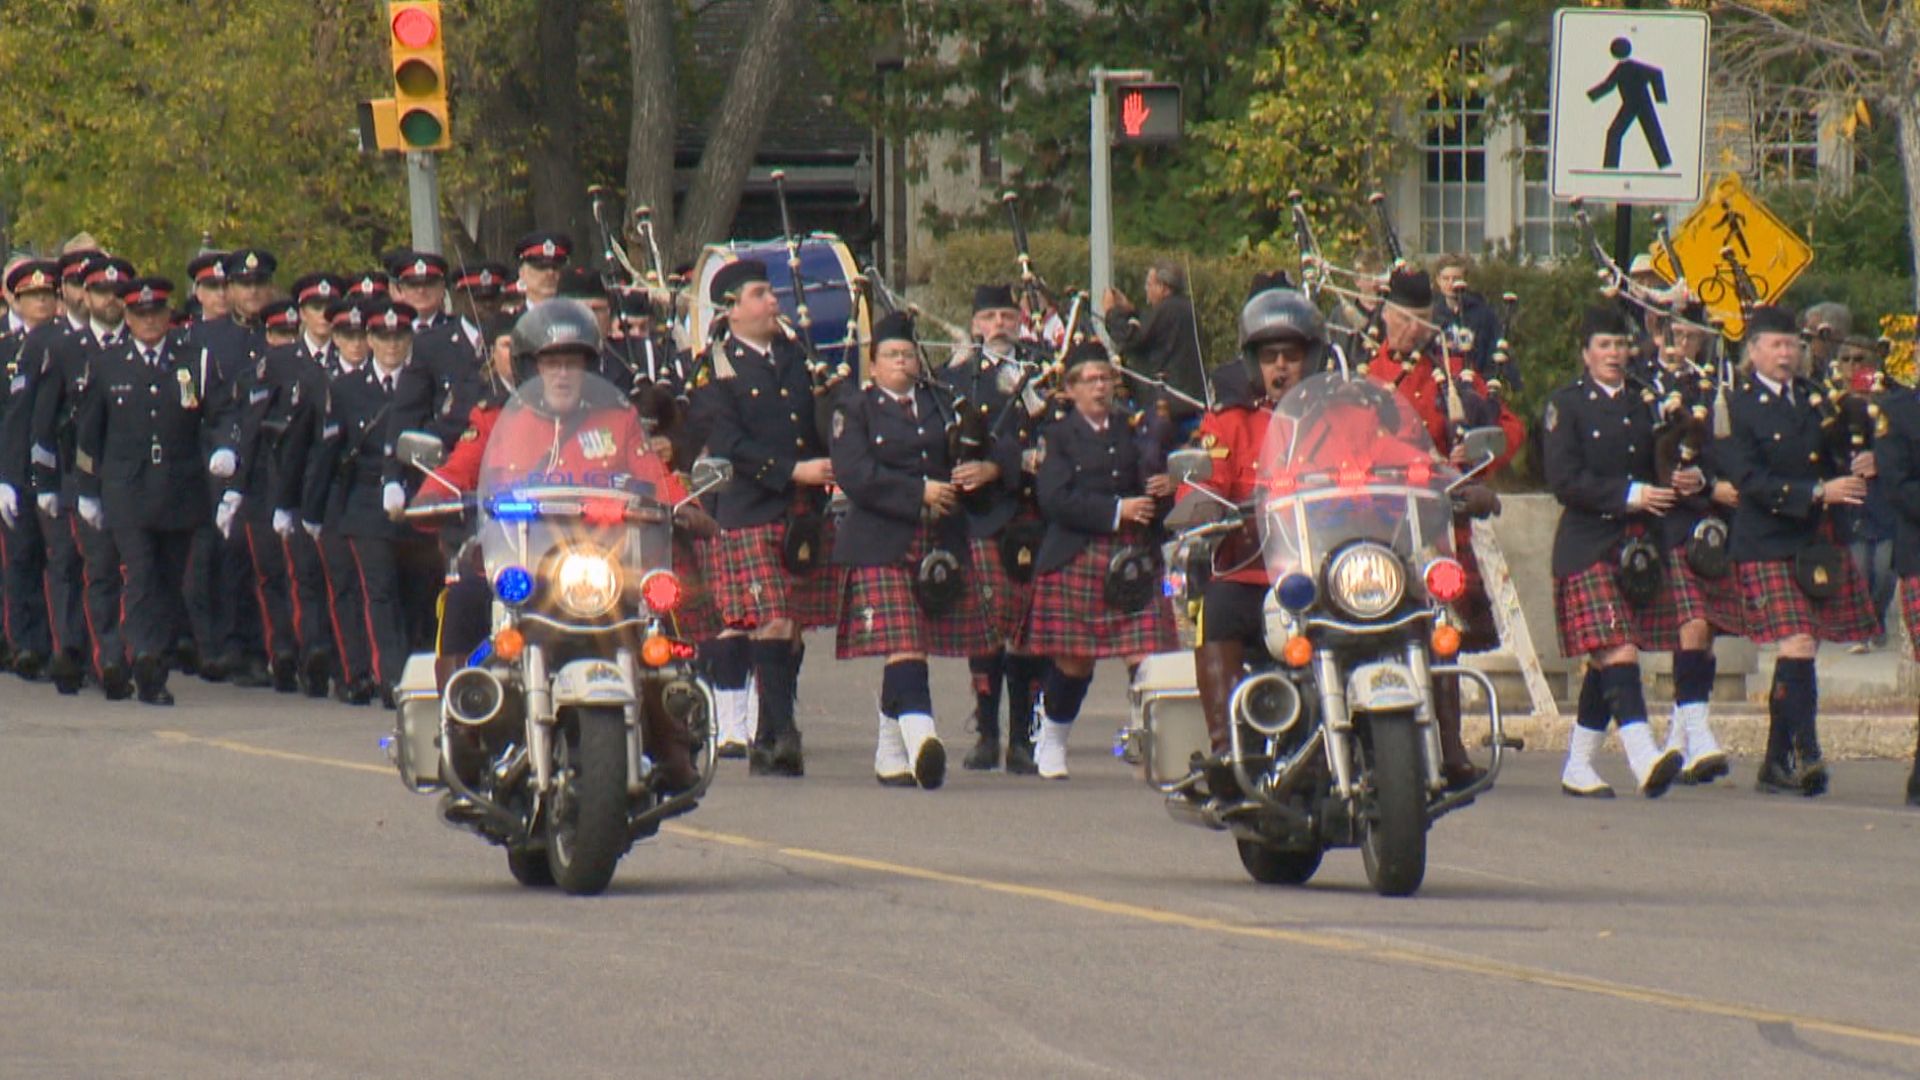 Memorial held for fallen police officers at Saskatchewan legislature